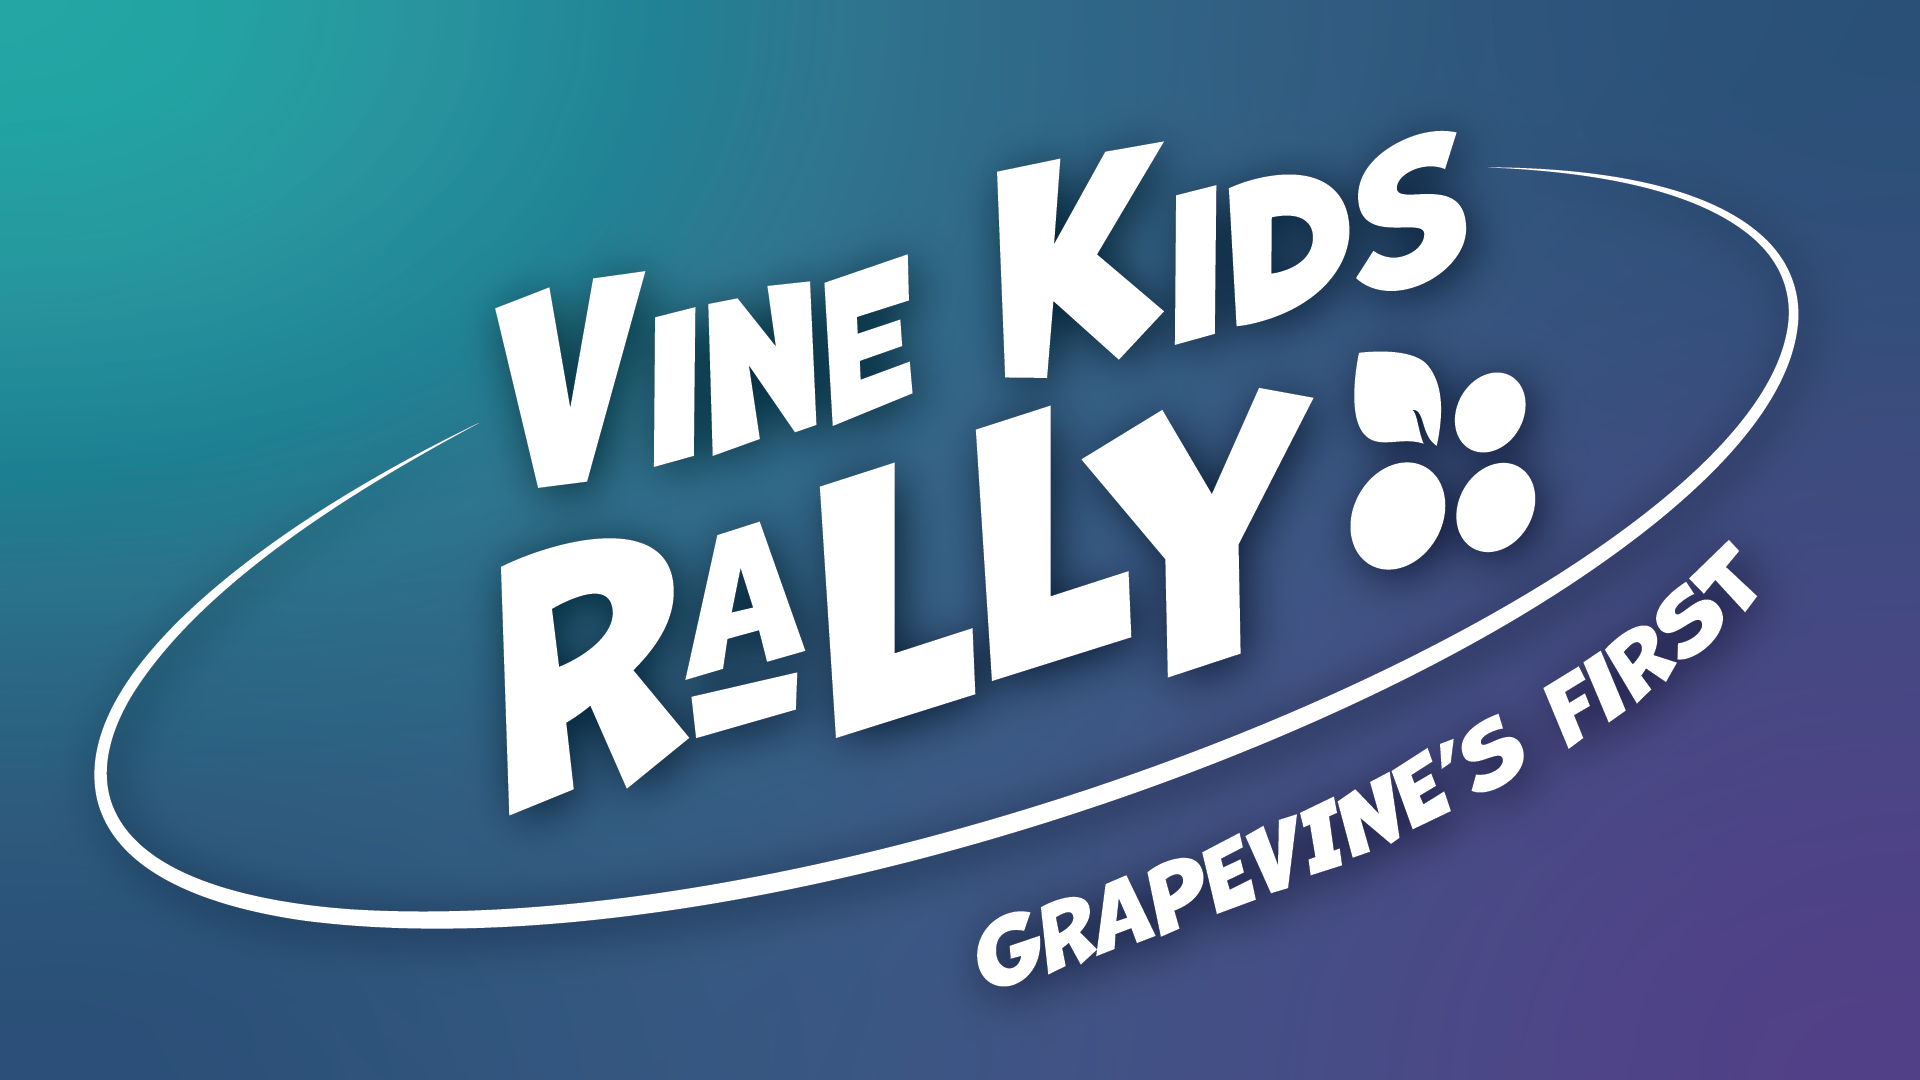 Vine Kids Rally 2023